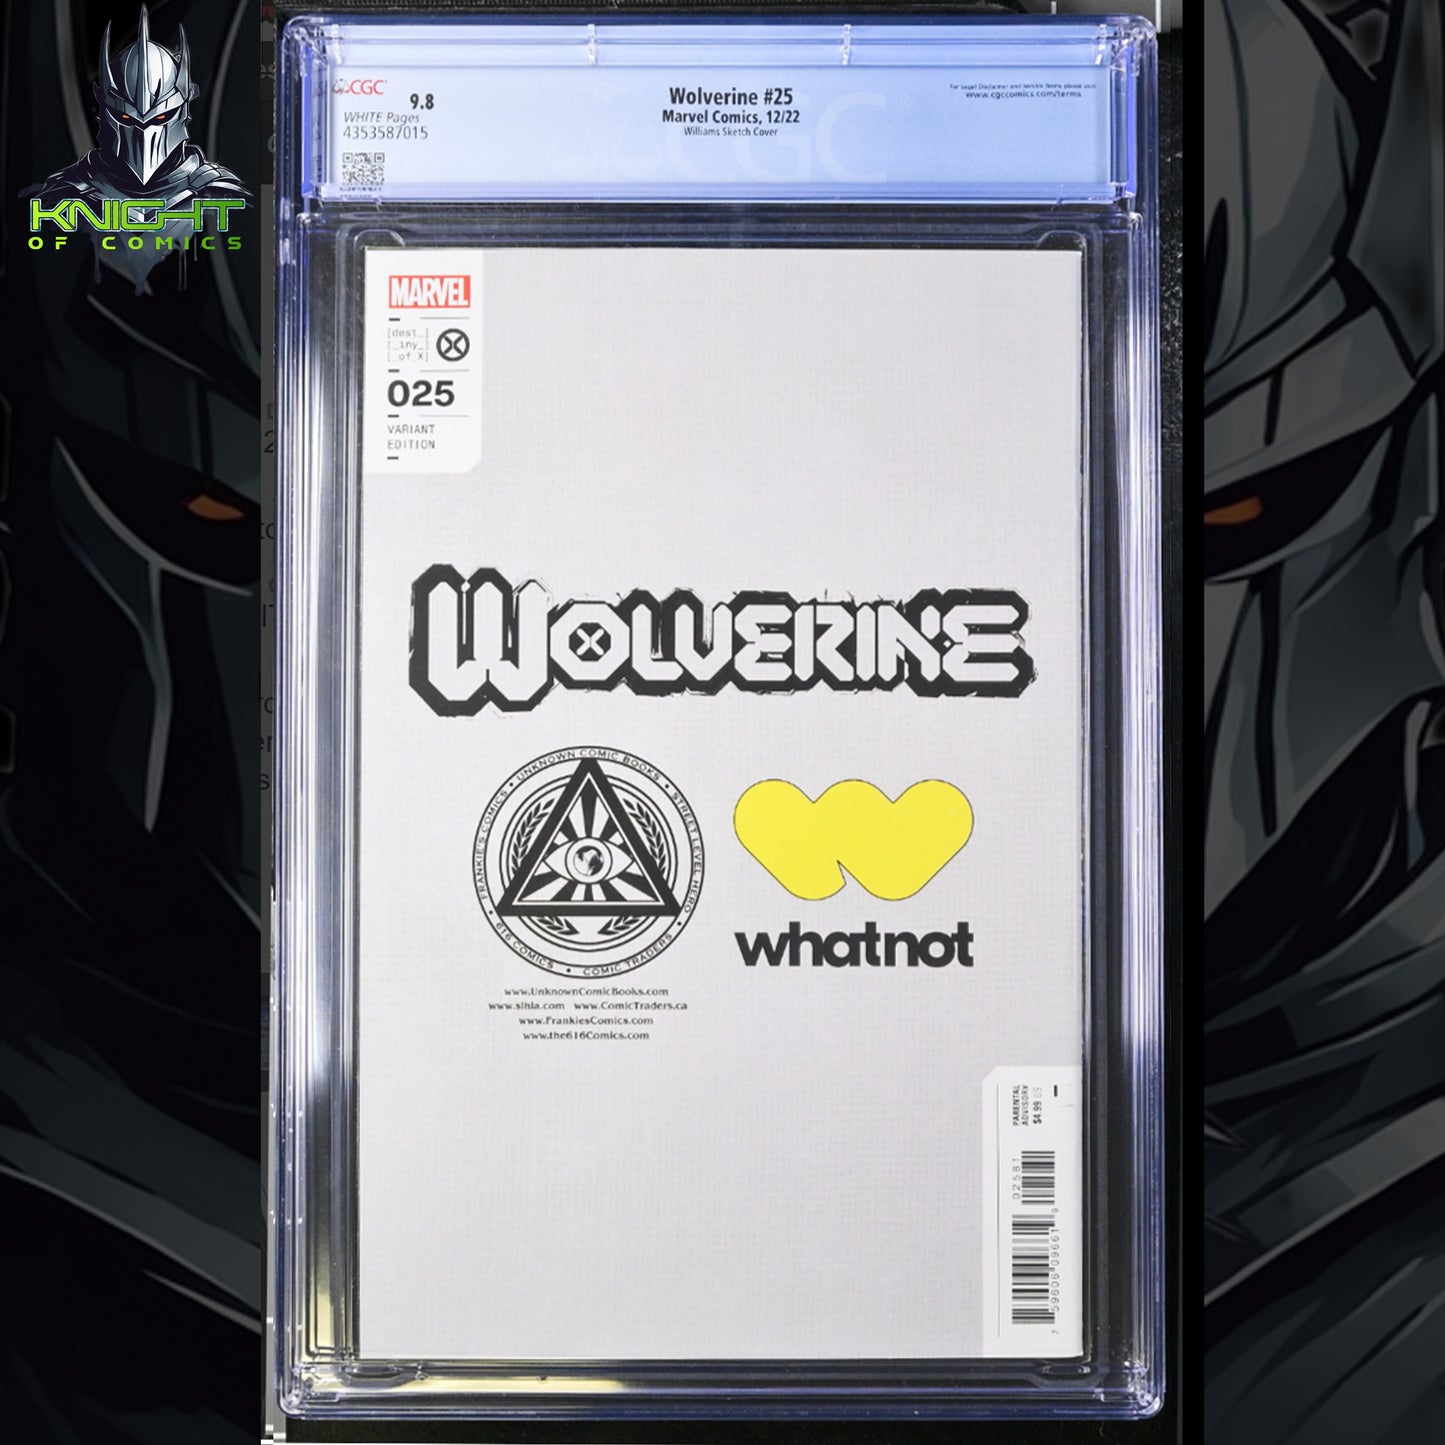 WOLVERINE #25 - SCOTT WILLIAMS SKETCH VIRGIN EDITION WHATNOT EXCLUSIVE CGC 9.8